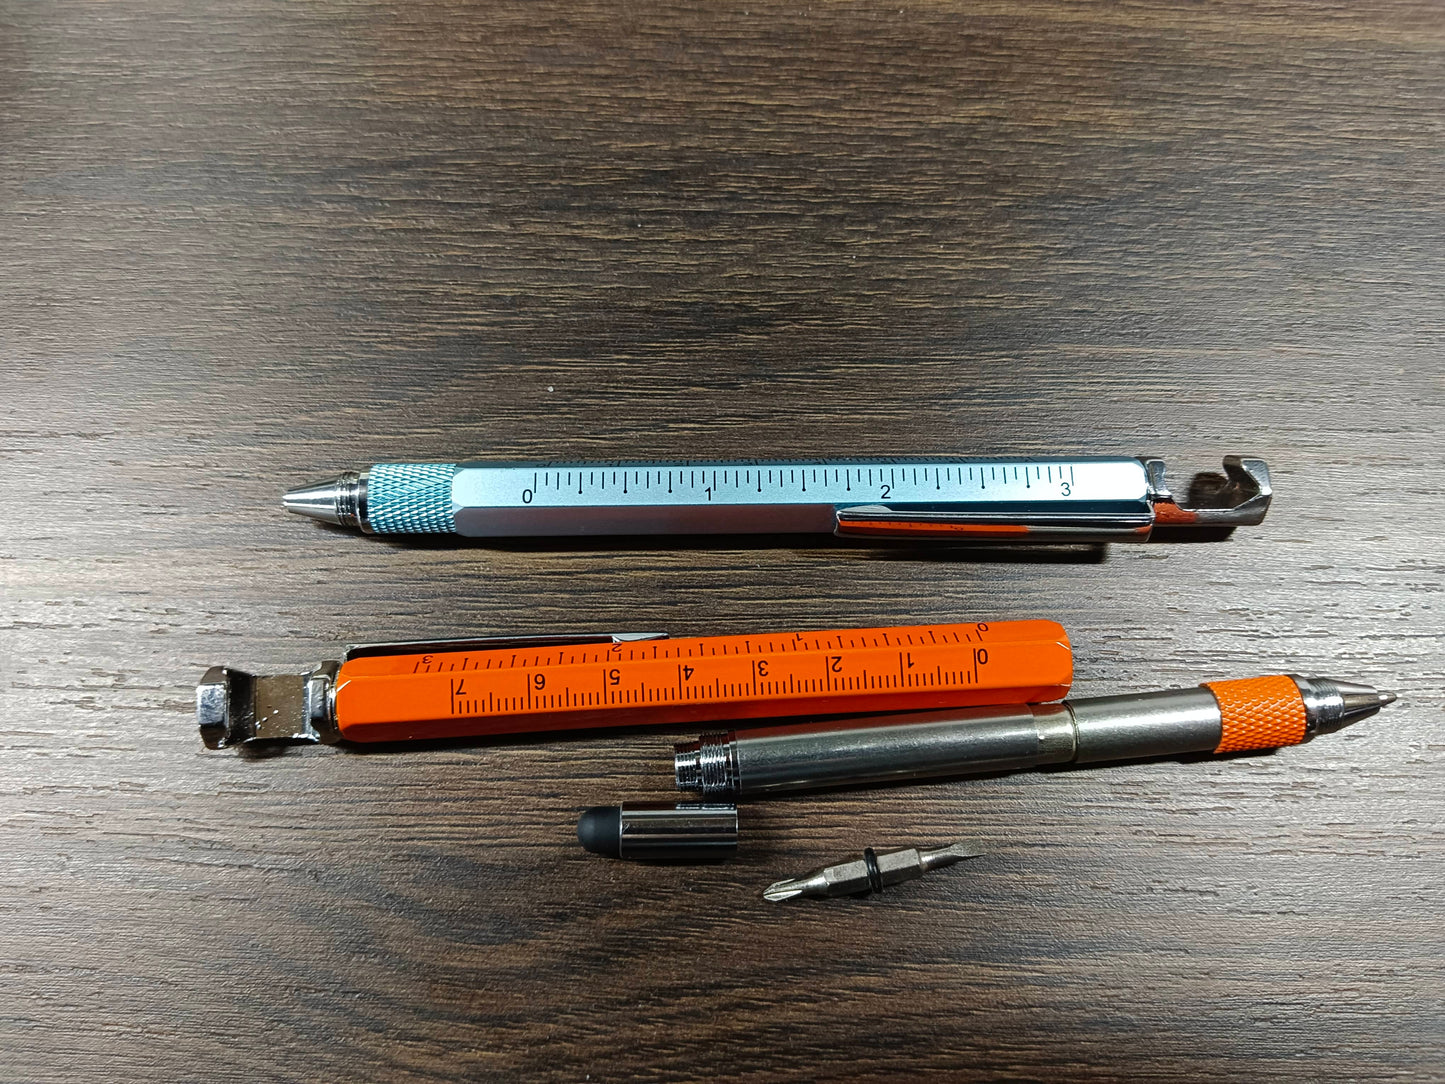 The GE Group Metal Pens